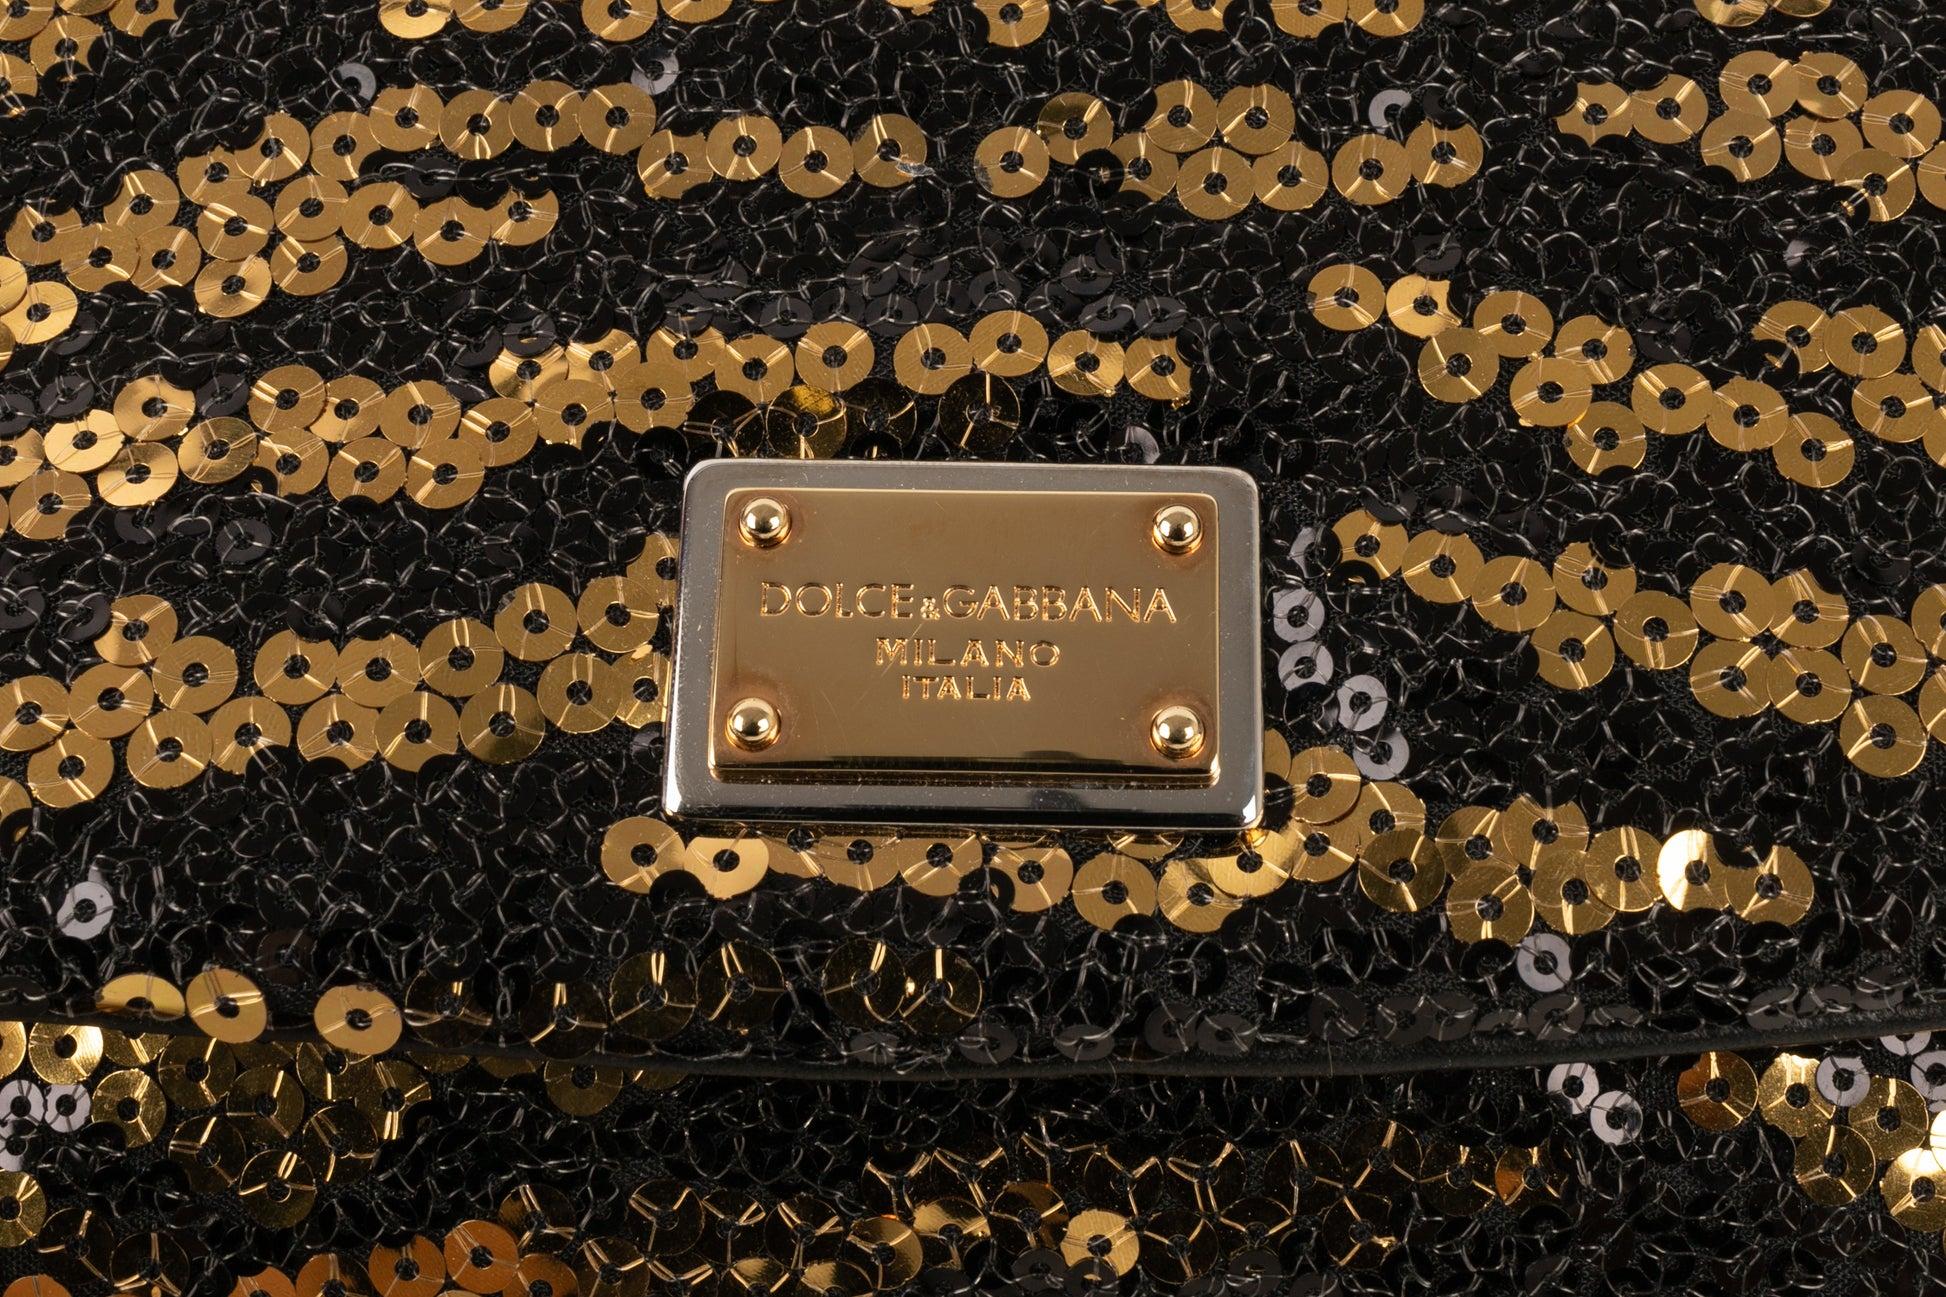 Dolce & Gabbana Black Foal Skin Sicily Bag with Sequins & Golden Metal Elements For Sale 4